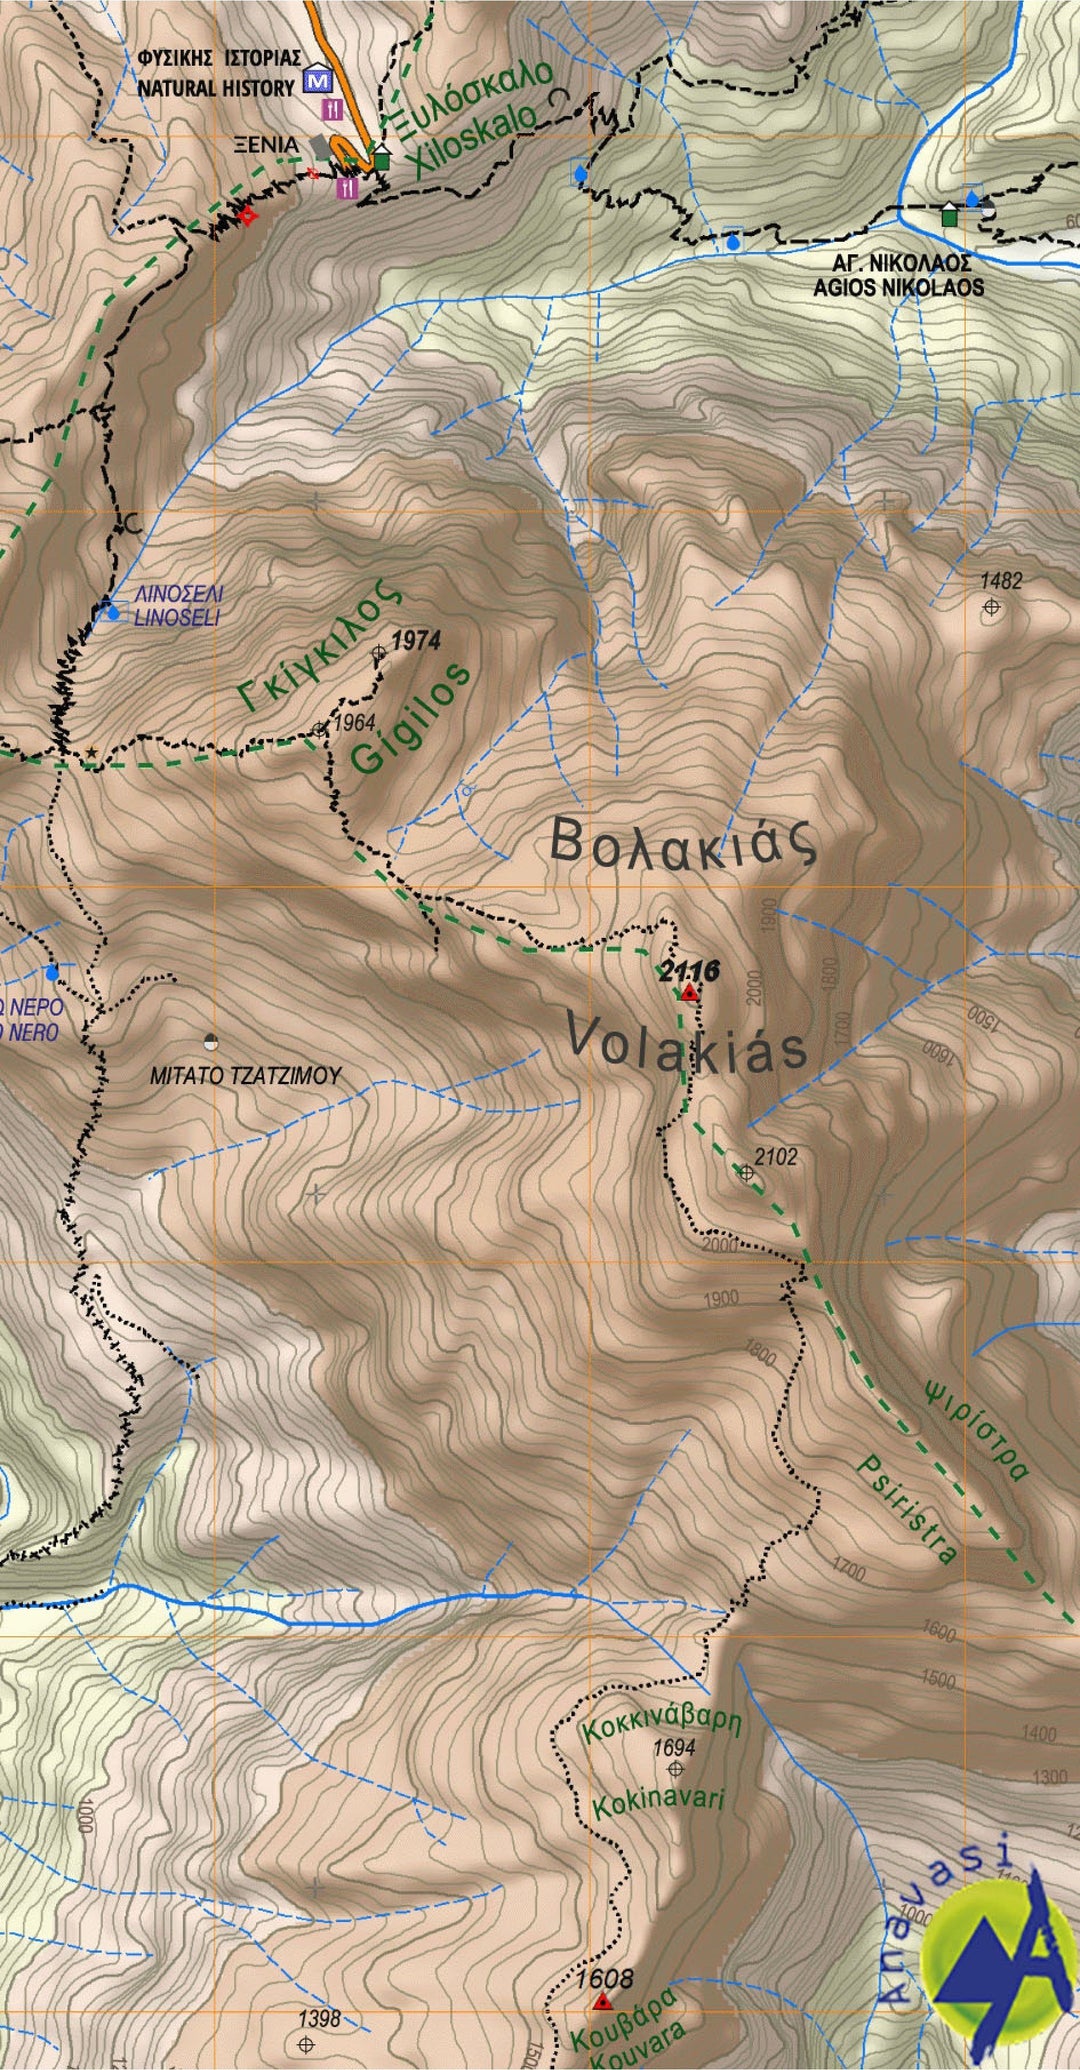 Carte de randonnée - Samaria, Sougia, Paliochora (Crète) | Anavasi carte pliée Anavasi 